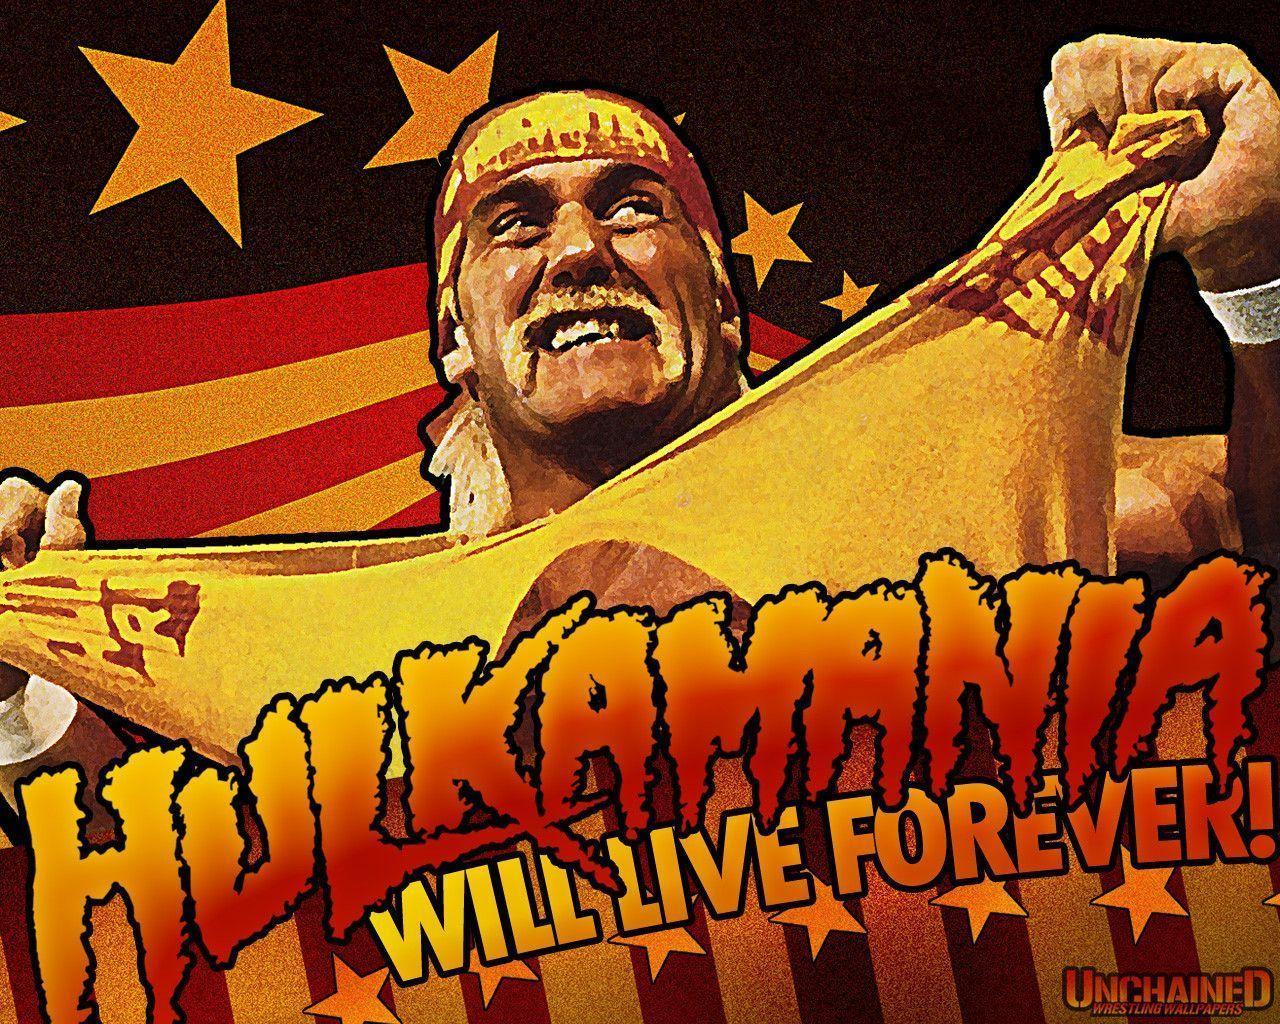 WWE / TNA Wrestling Hulk Hogan "Hulkamania Will Live Forever